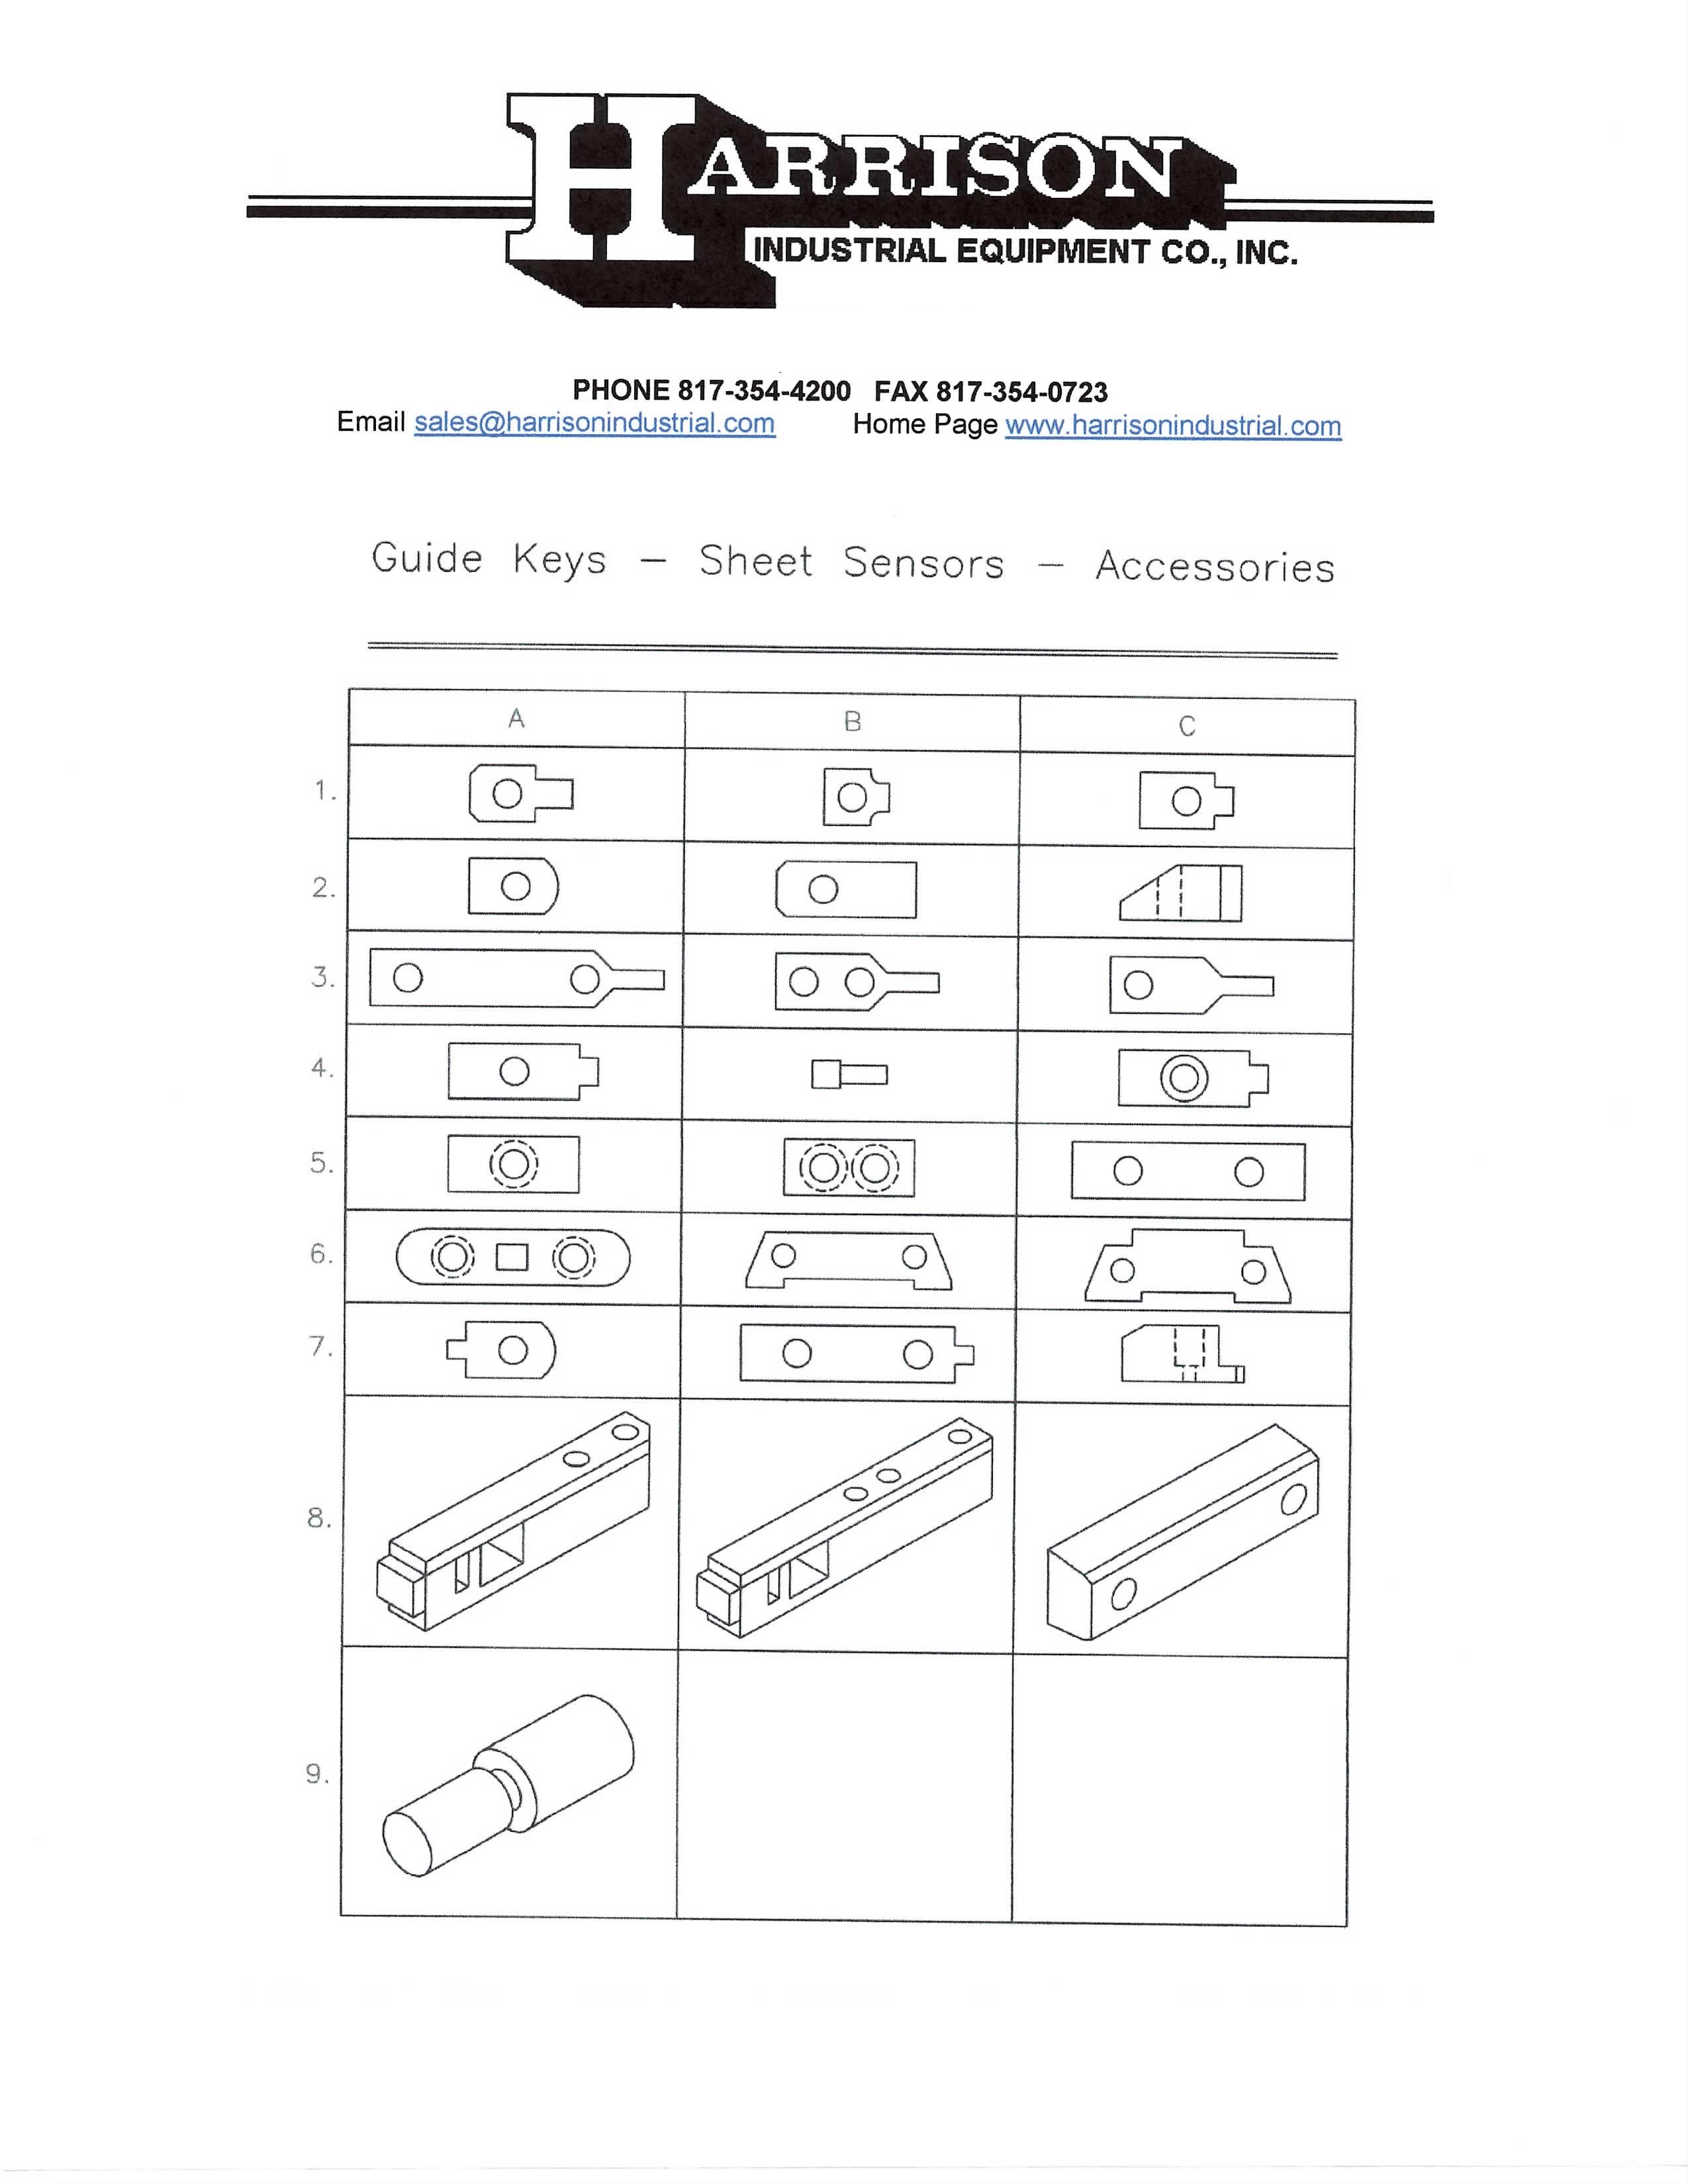 Guide Keys Sheet Sensors Accesories